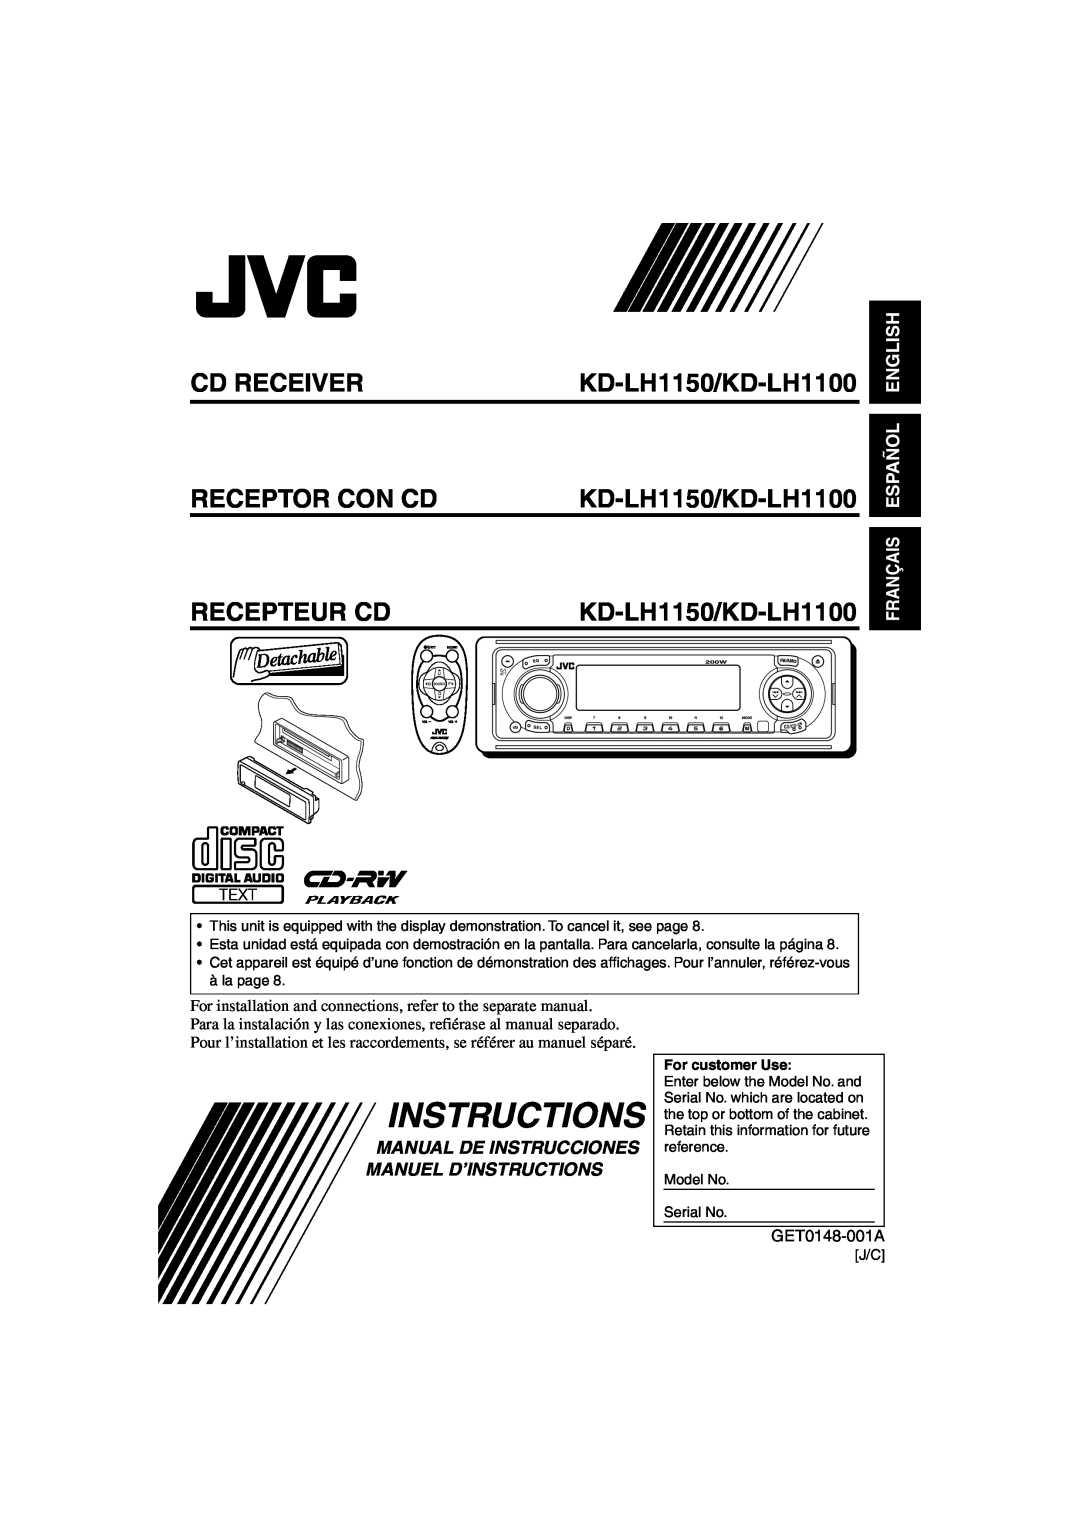 JVC manual Cd Receiver Receptor Con Cd Recepteur Cd, KD-LH1150/KD-LH1100 KD-LH1150/KD-LH1100, Instructions, Français 